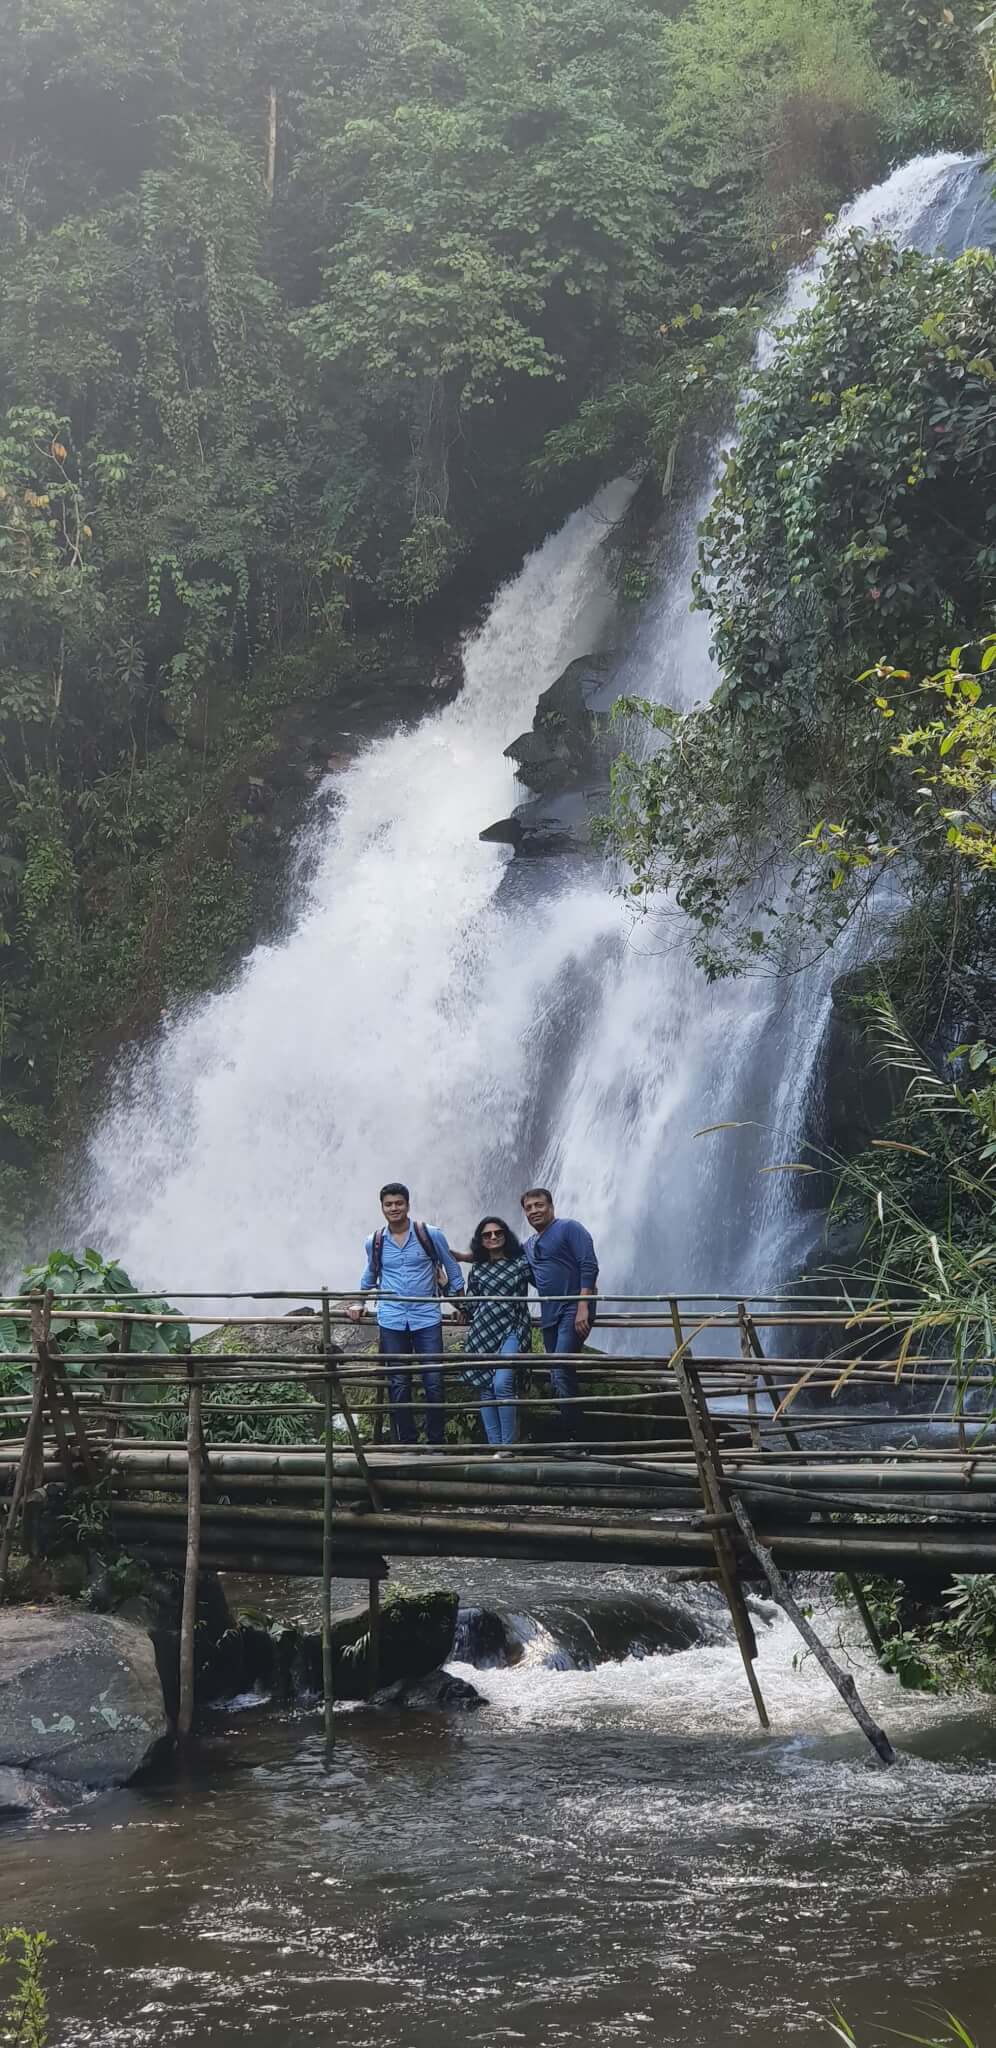 The stunning Pha Dok Siew waterfall